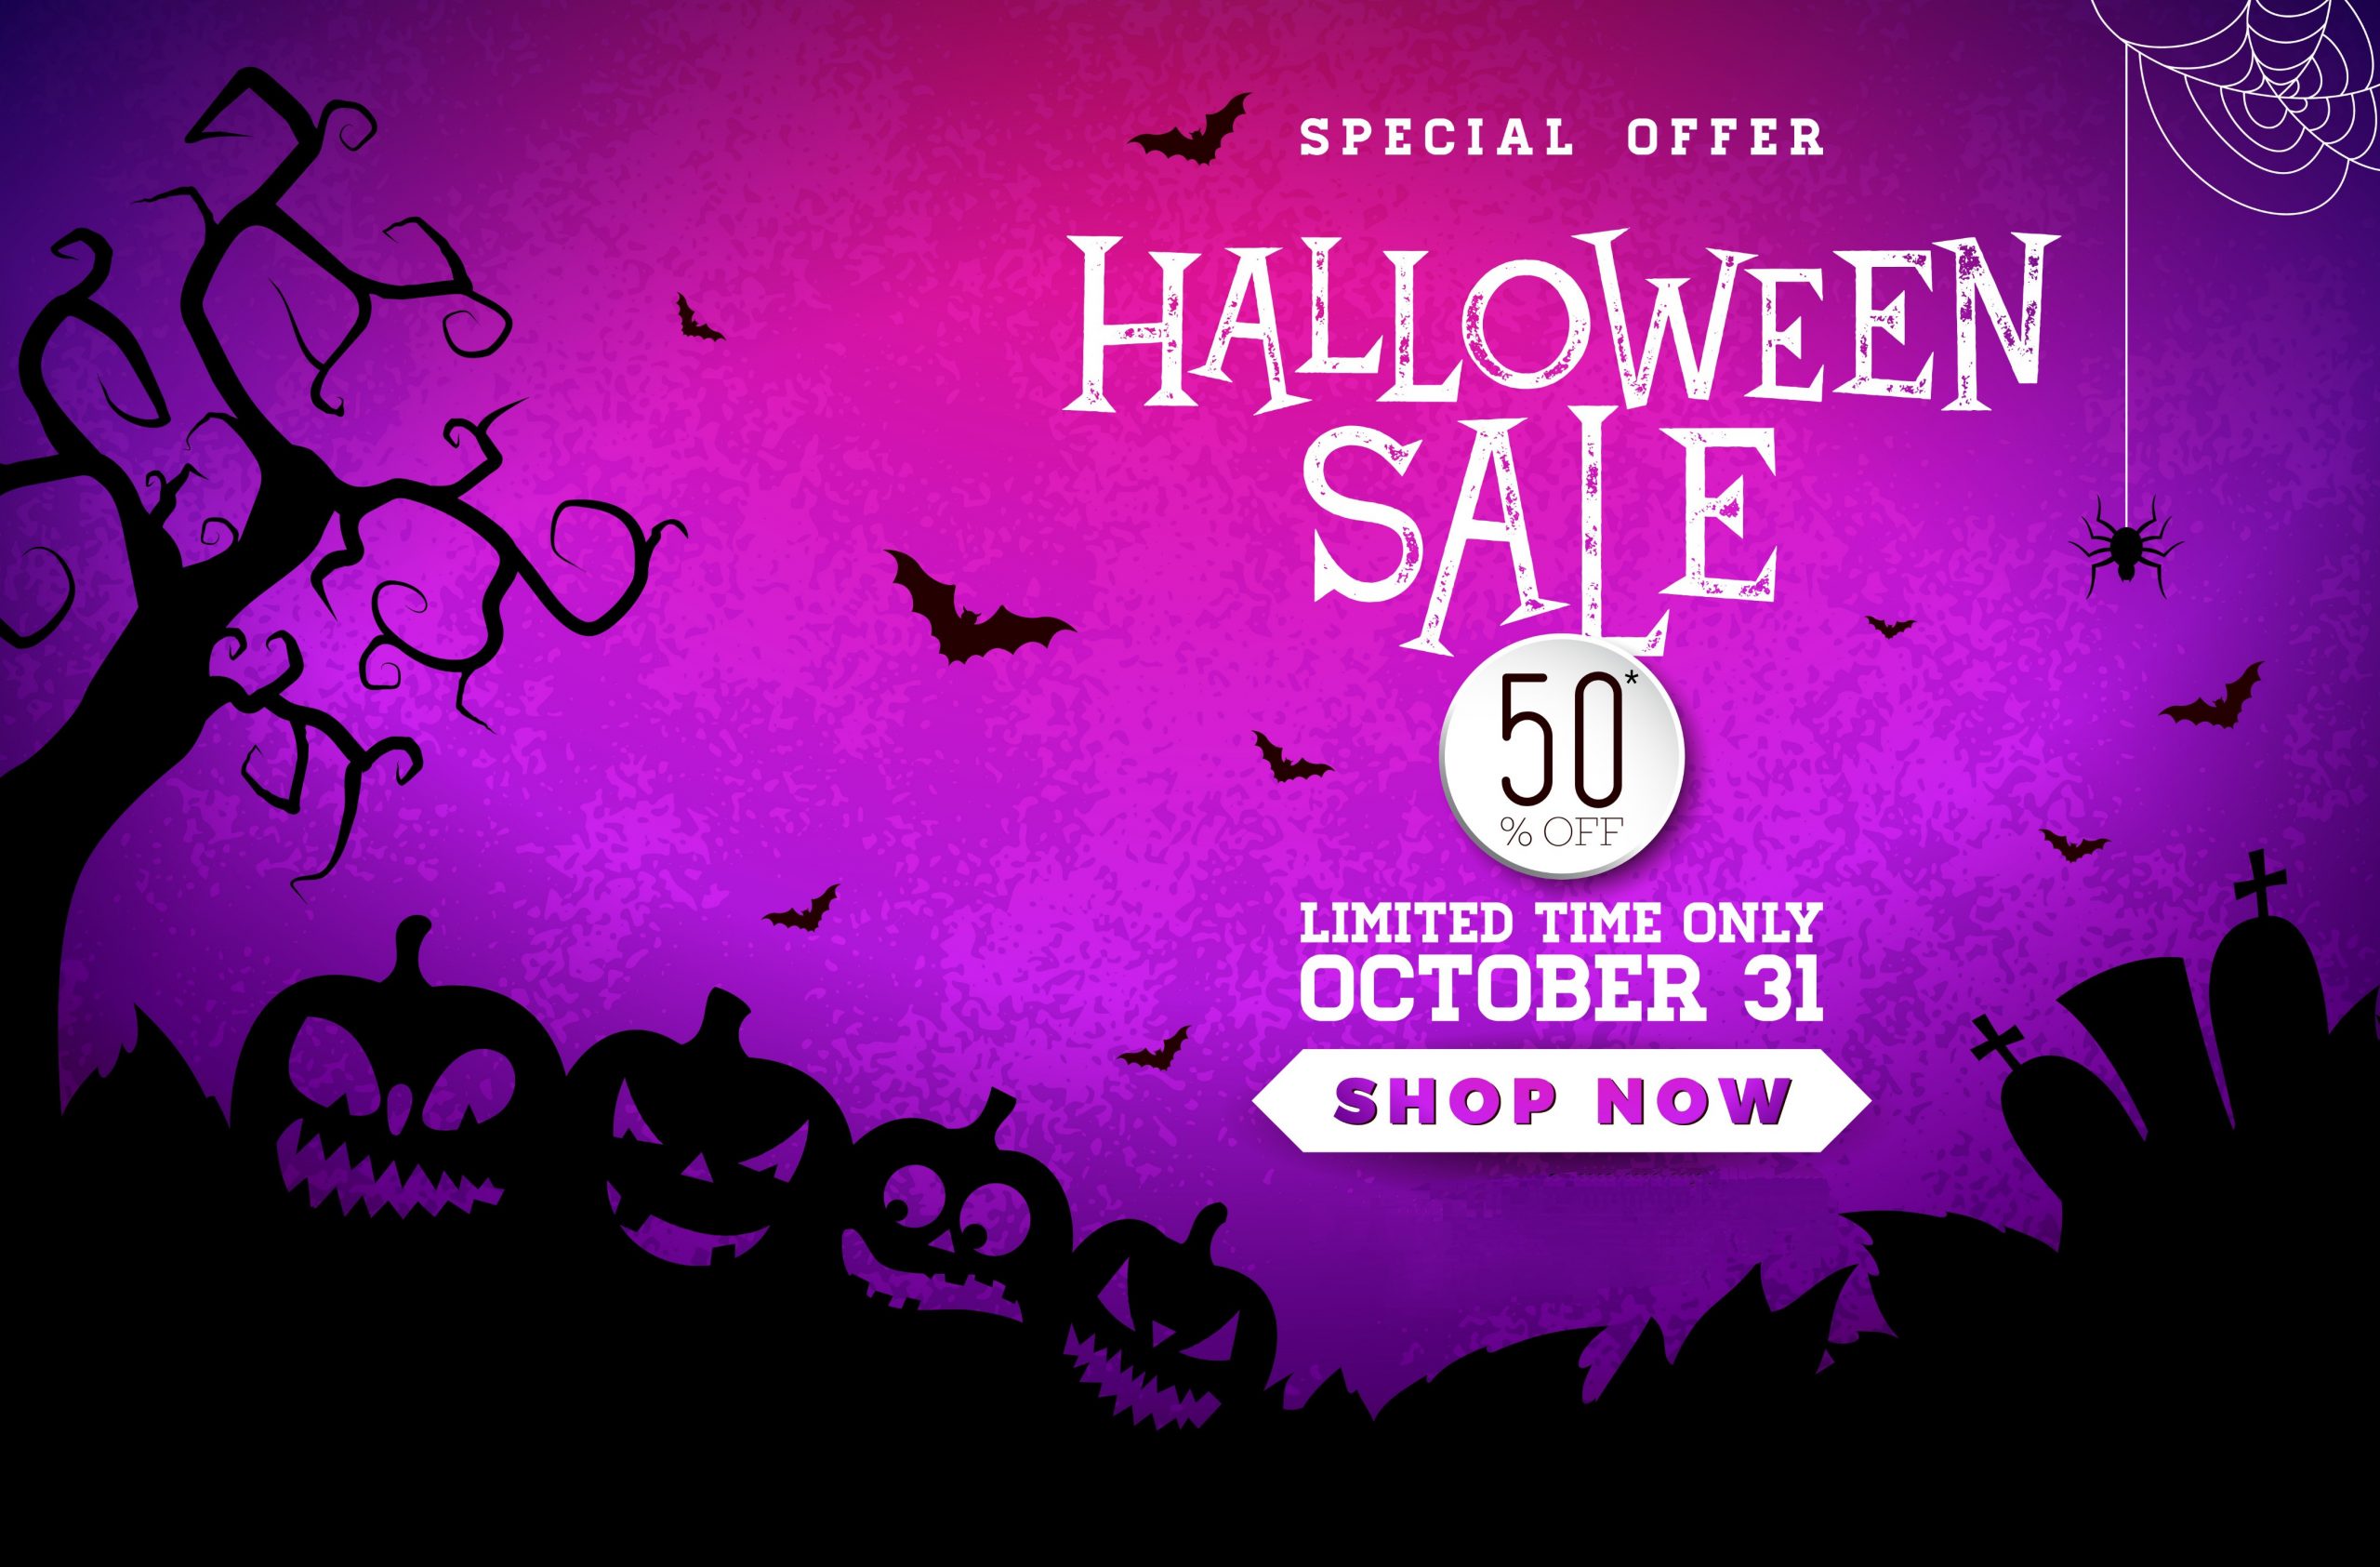 Halloween Offer Sales